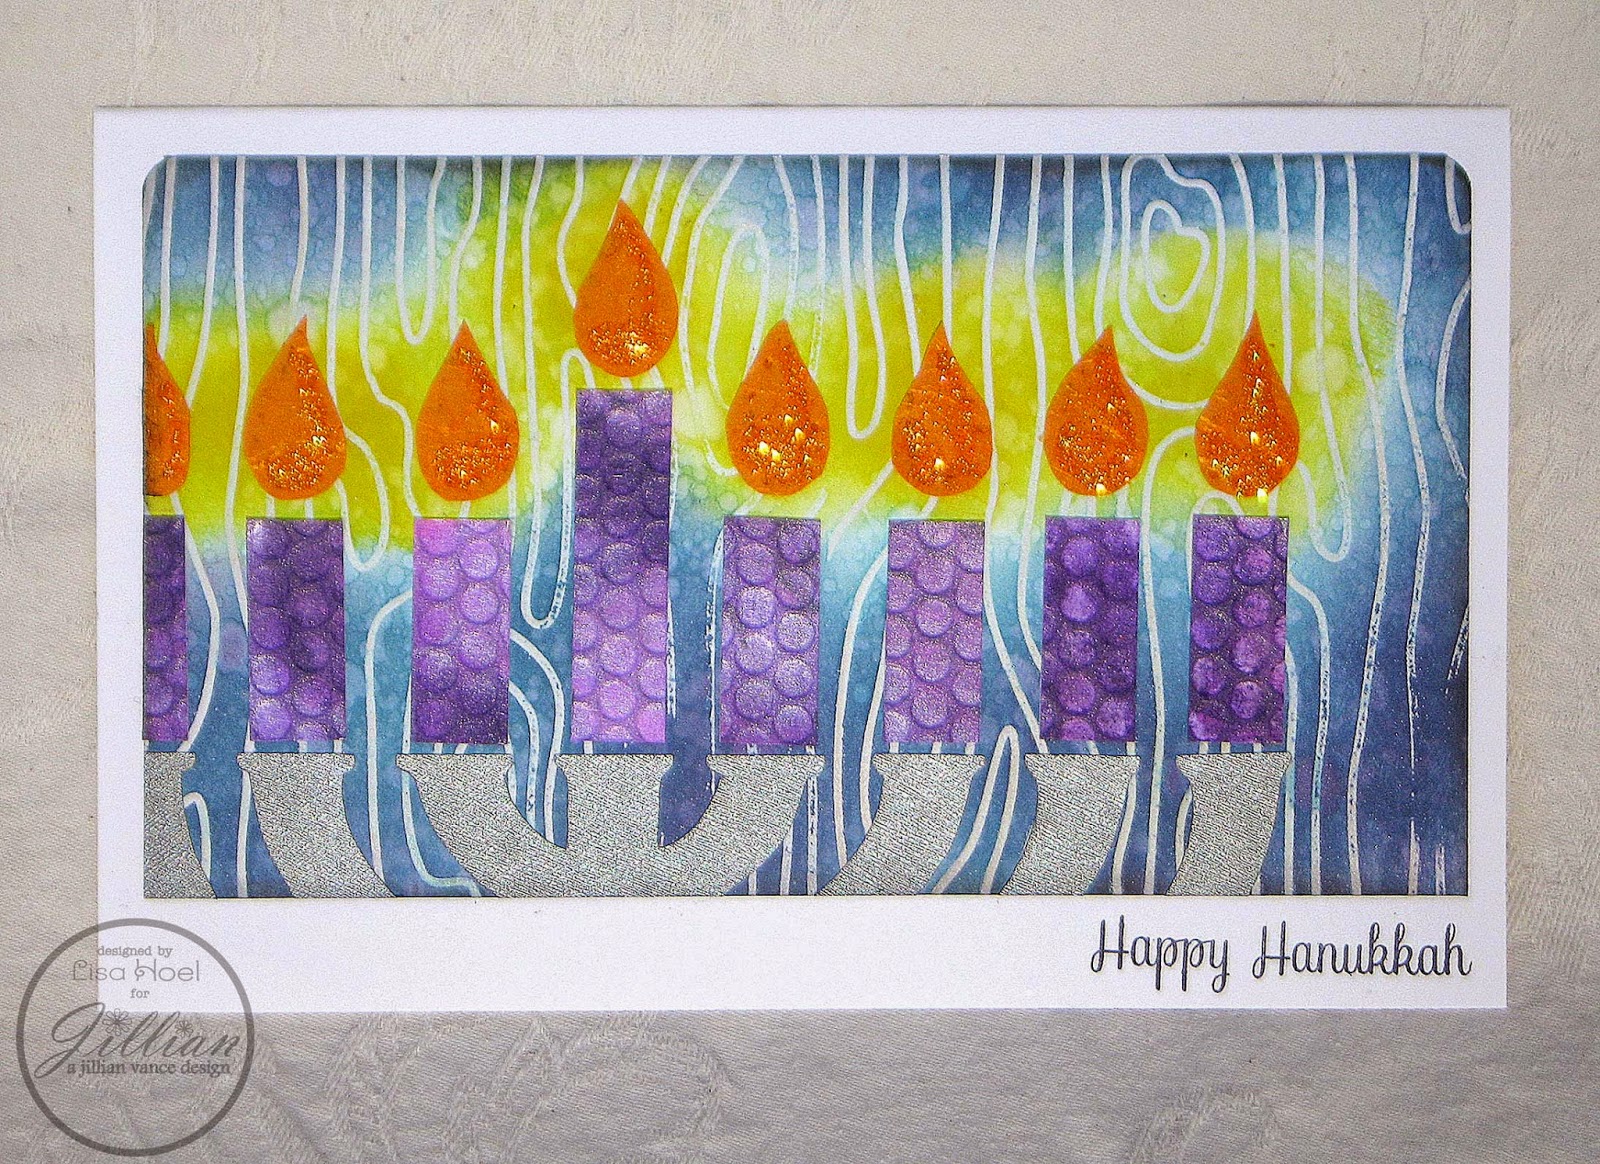 http://blog.ajillianvancedesign.com/2014/12/happy-hanukkah-card.html